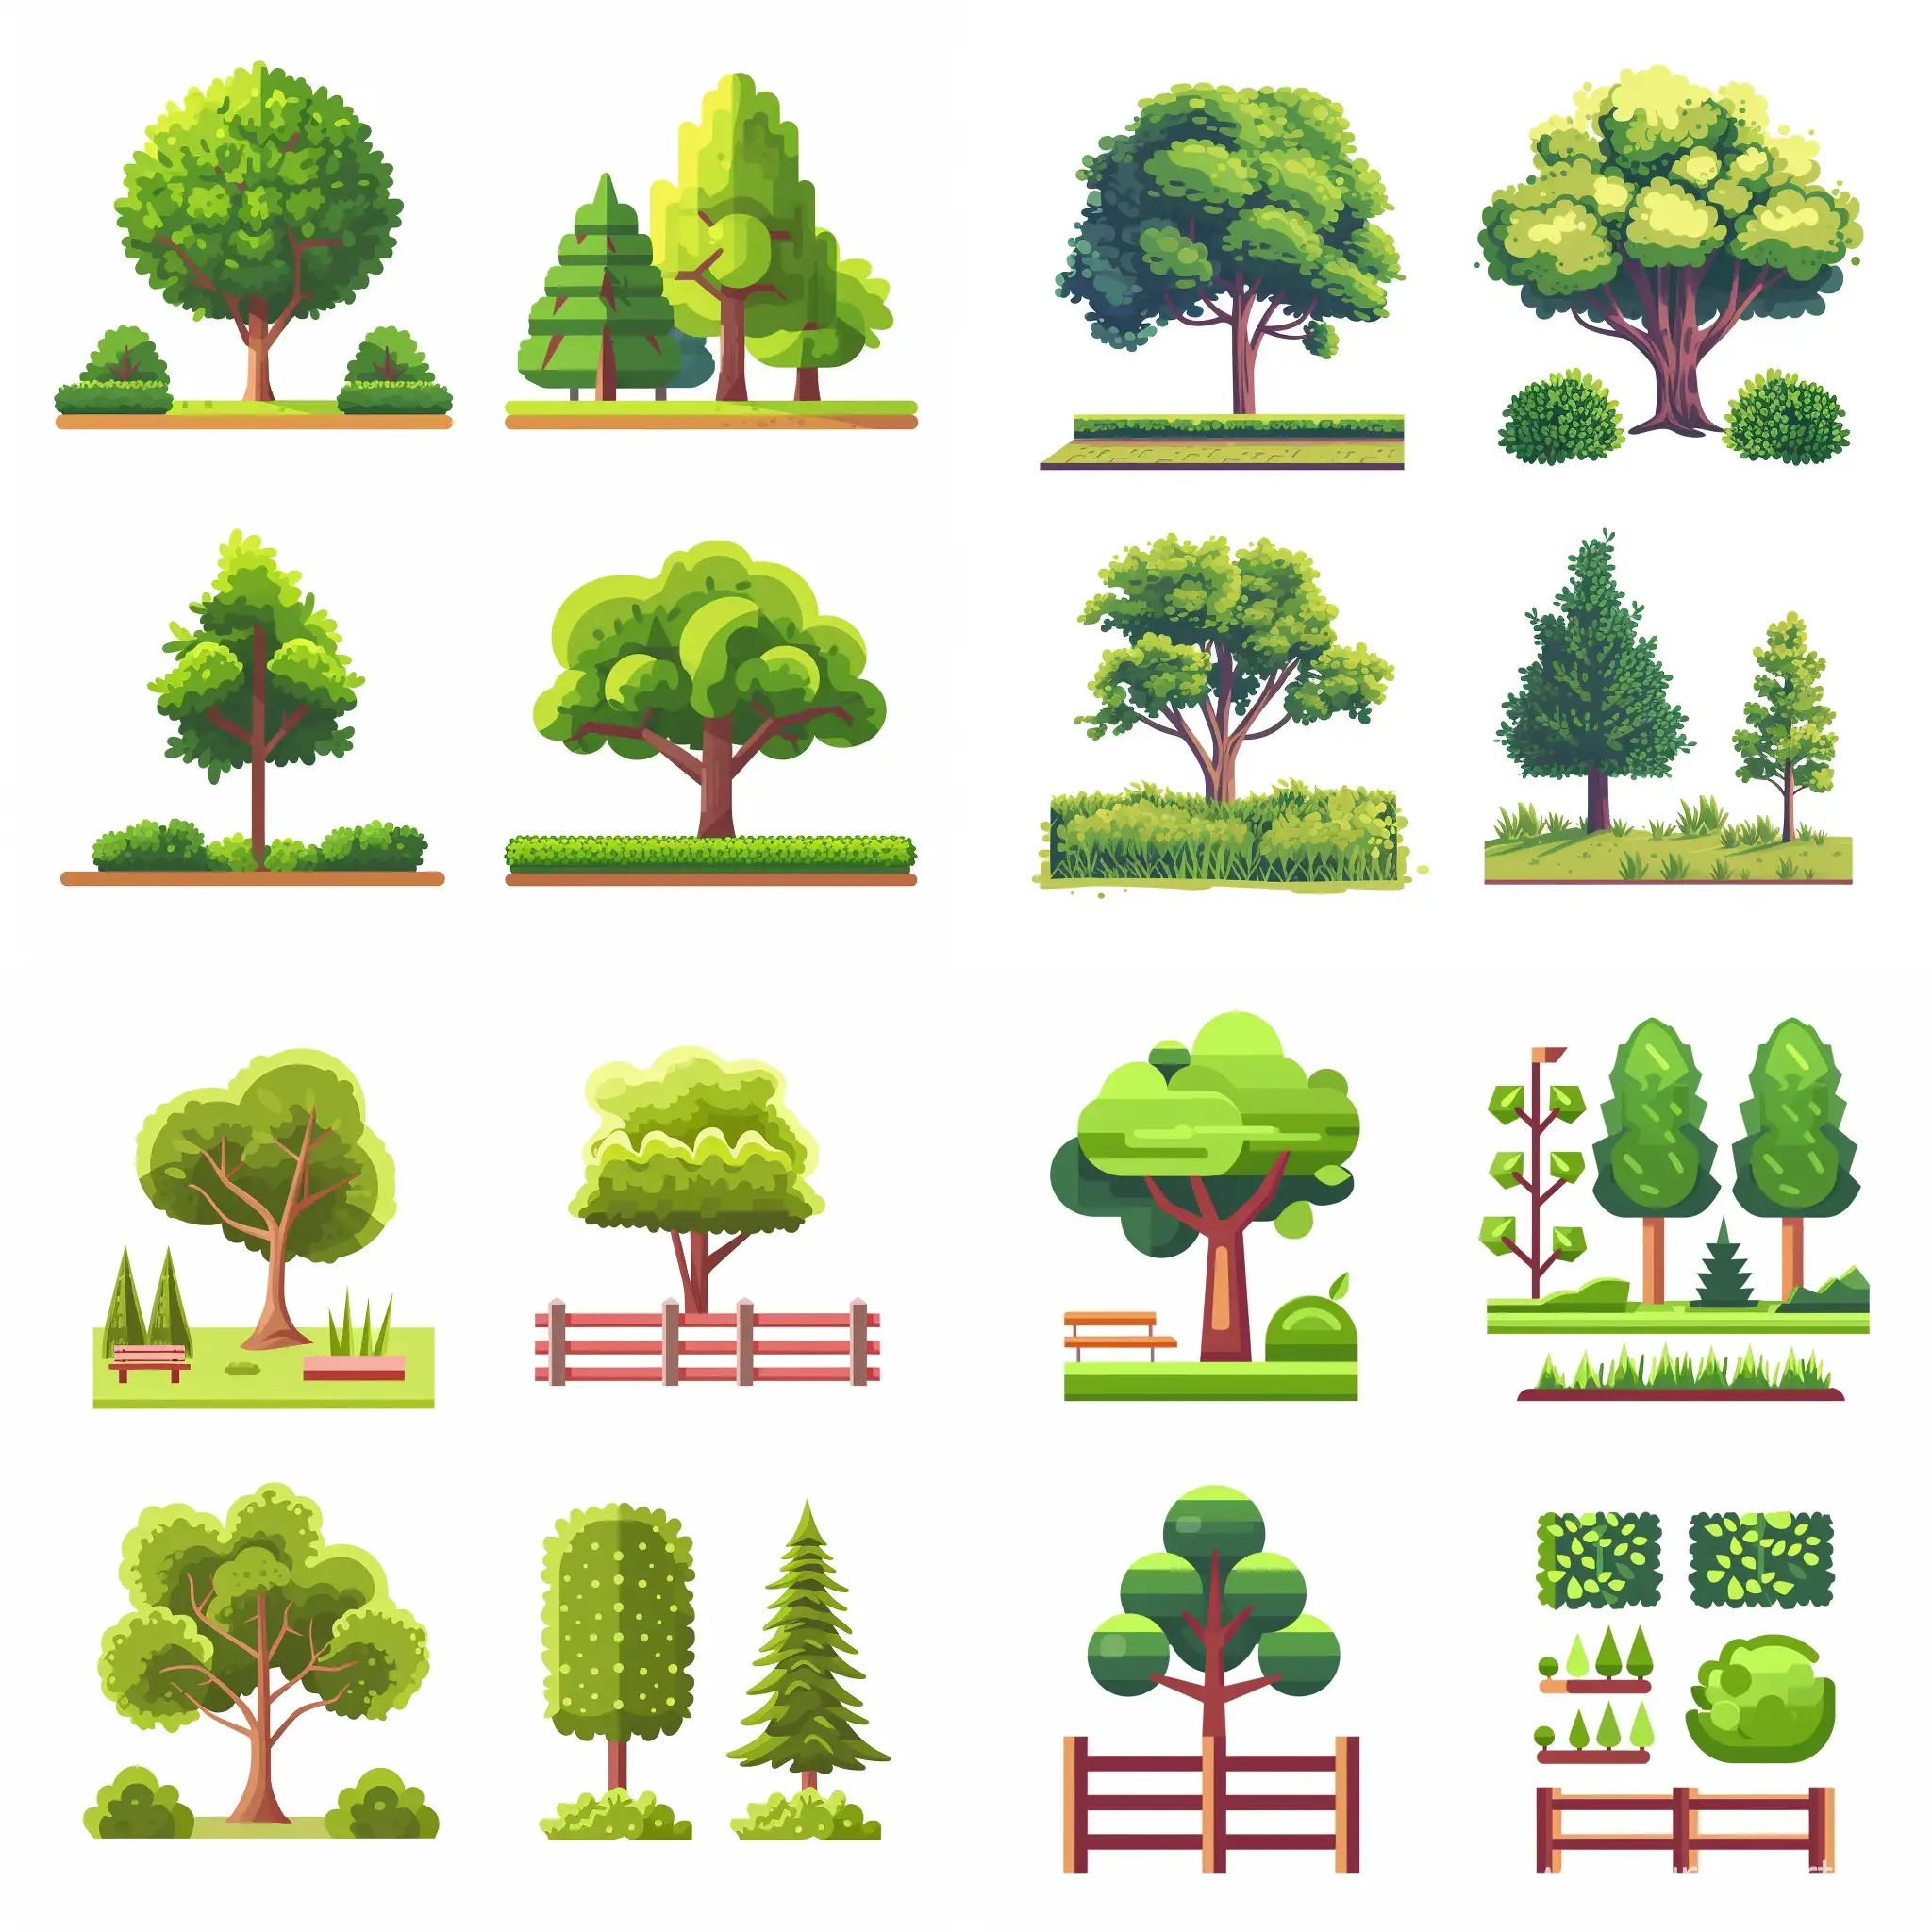 Lush-Greenery-Icons-Set-Parks-Vegetation-Borders-Trees-and-Shrubs